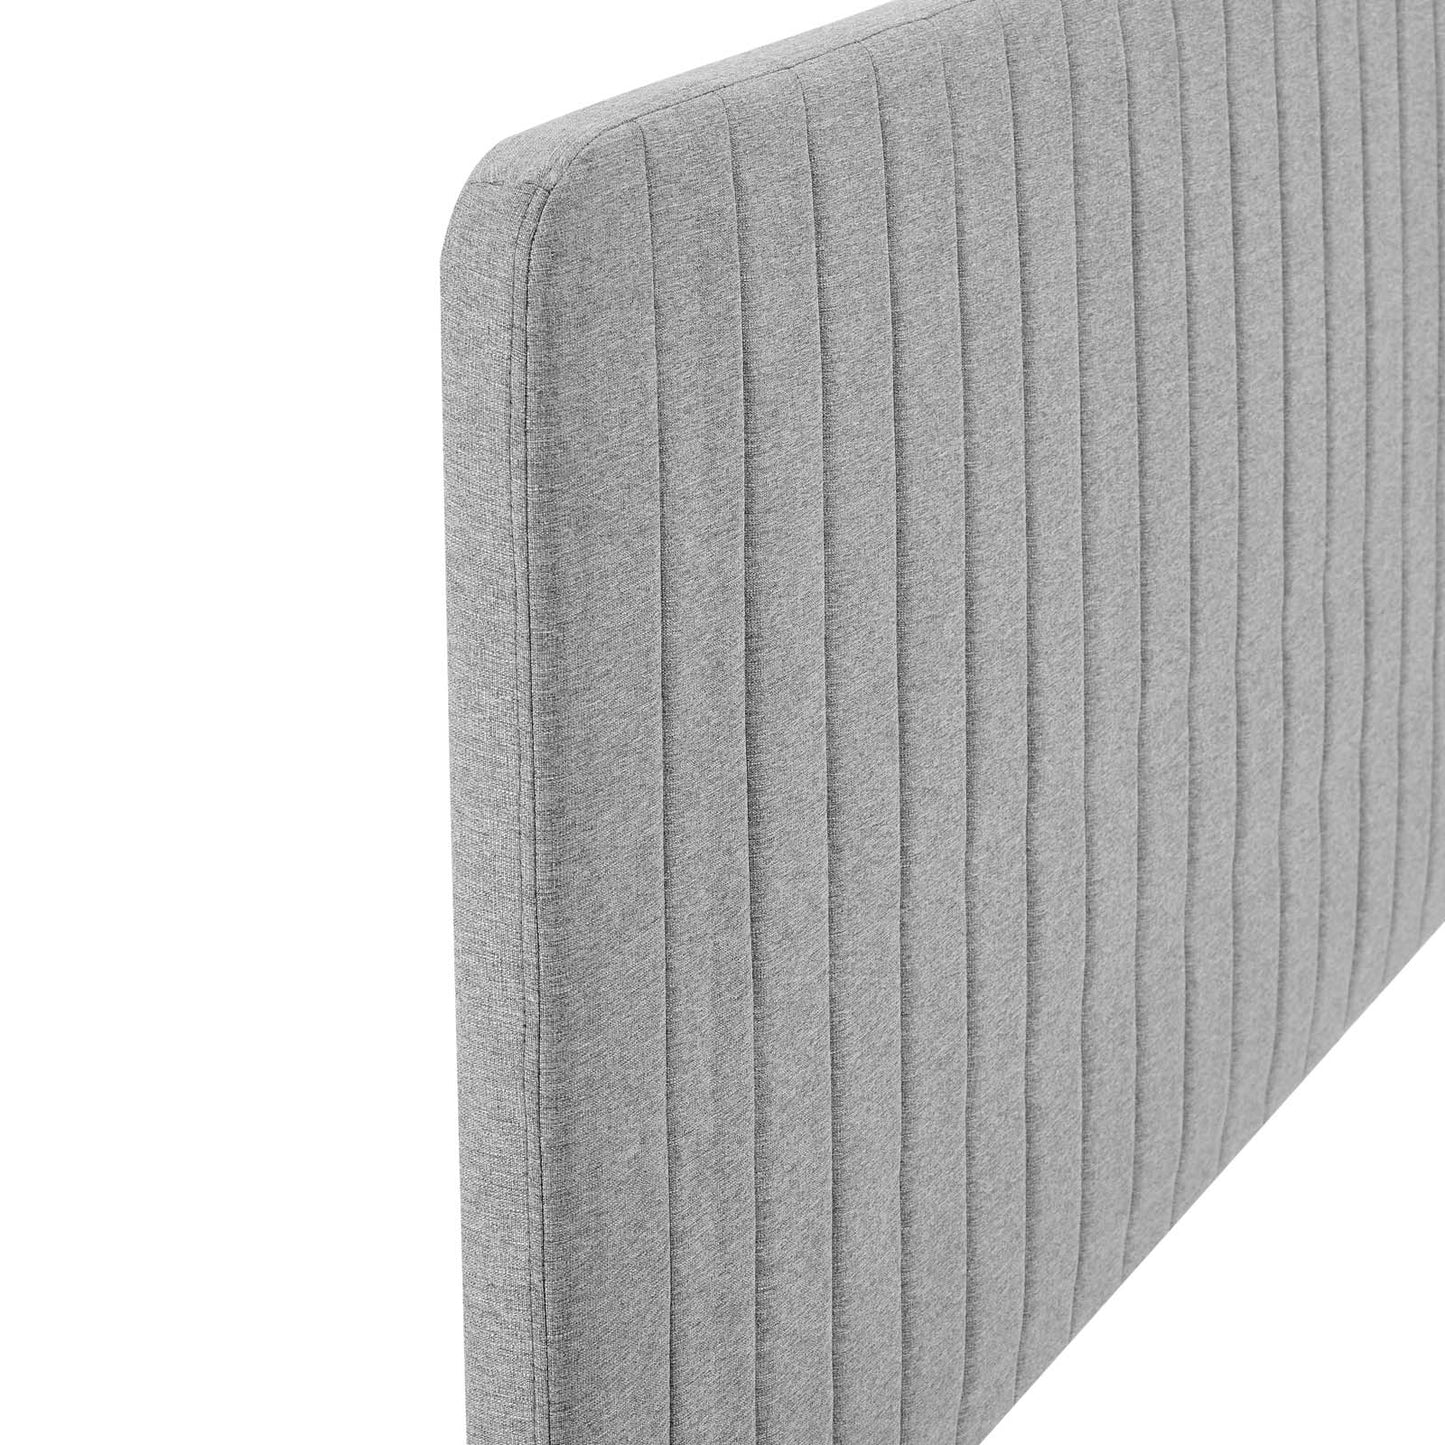 Milenna Channel Tufted Upholstered Fabric Twin Headboard Light Gray MOD-6338-LGR